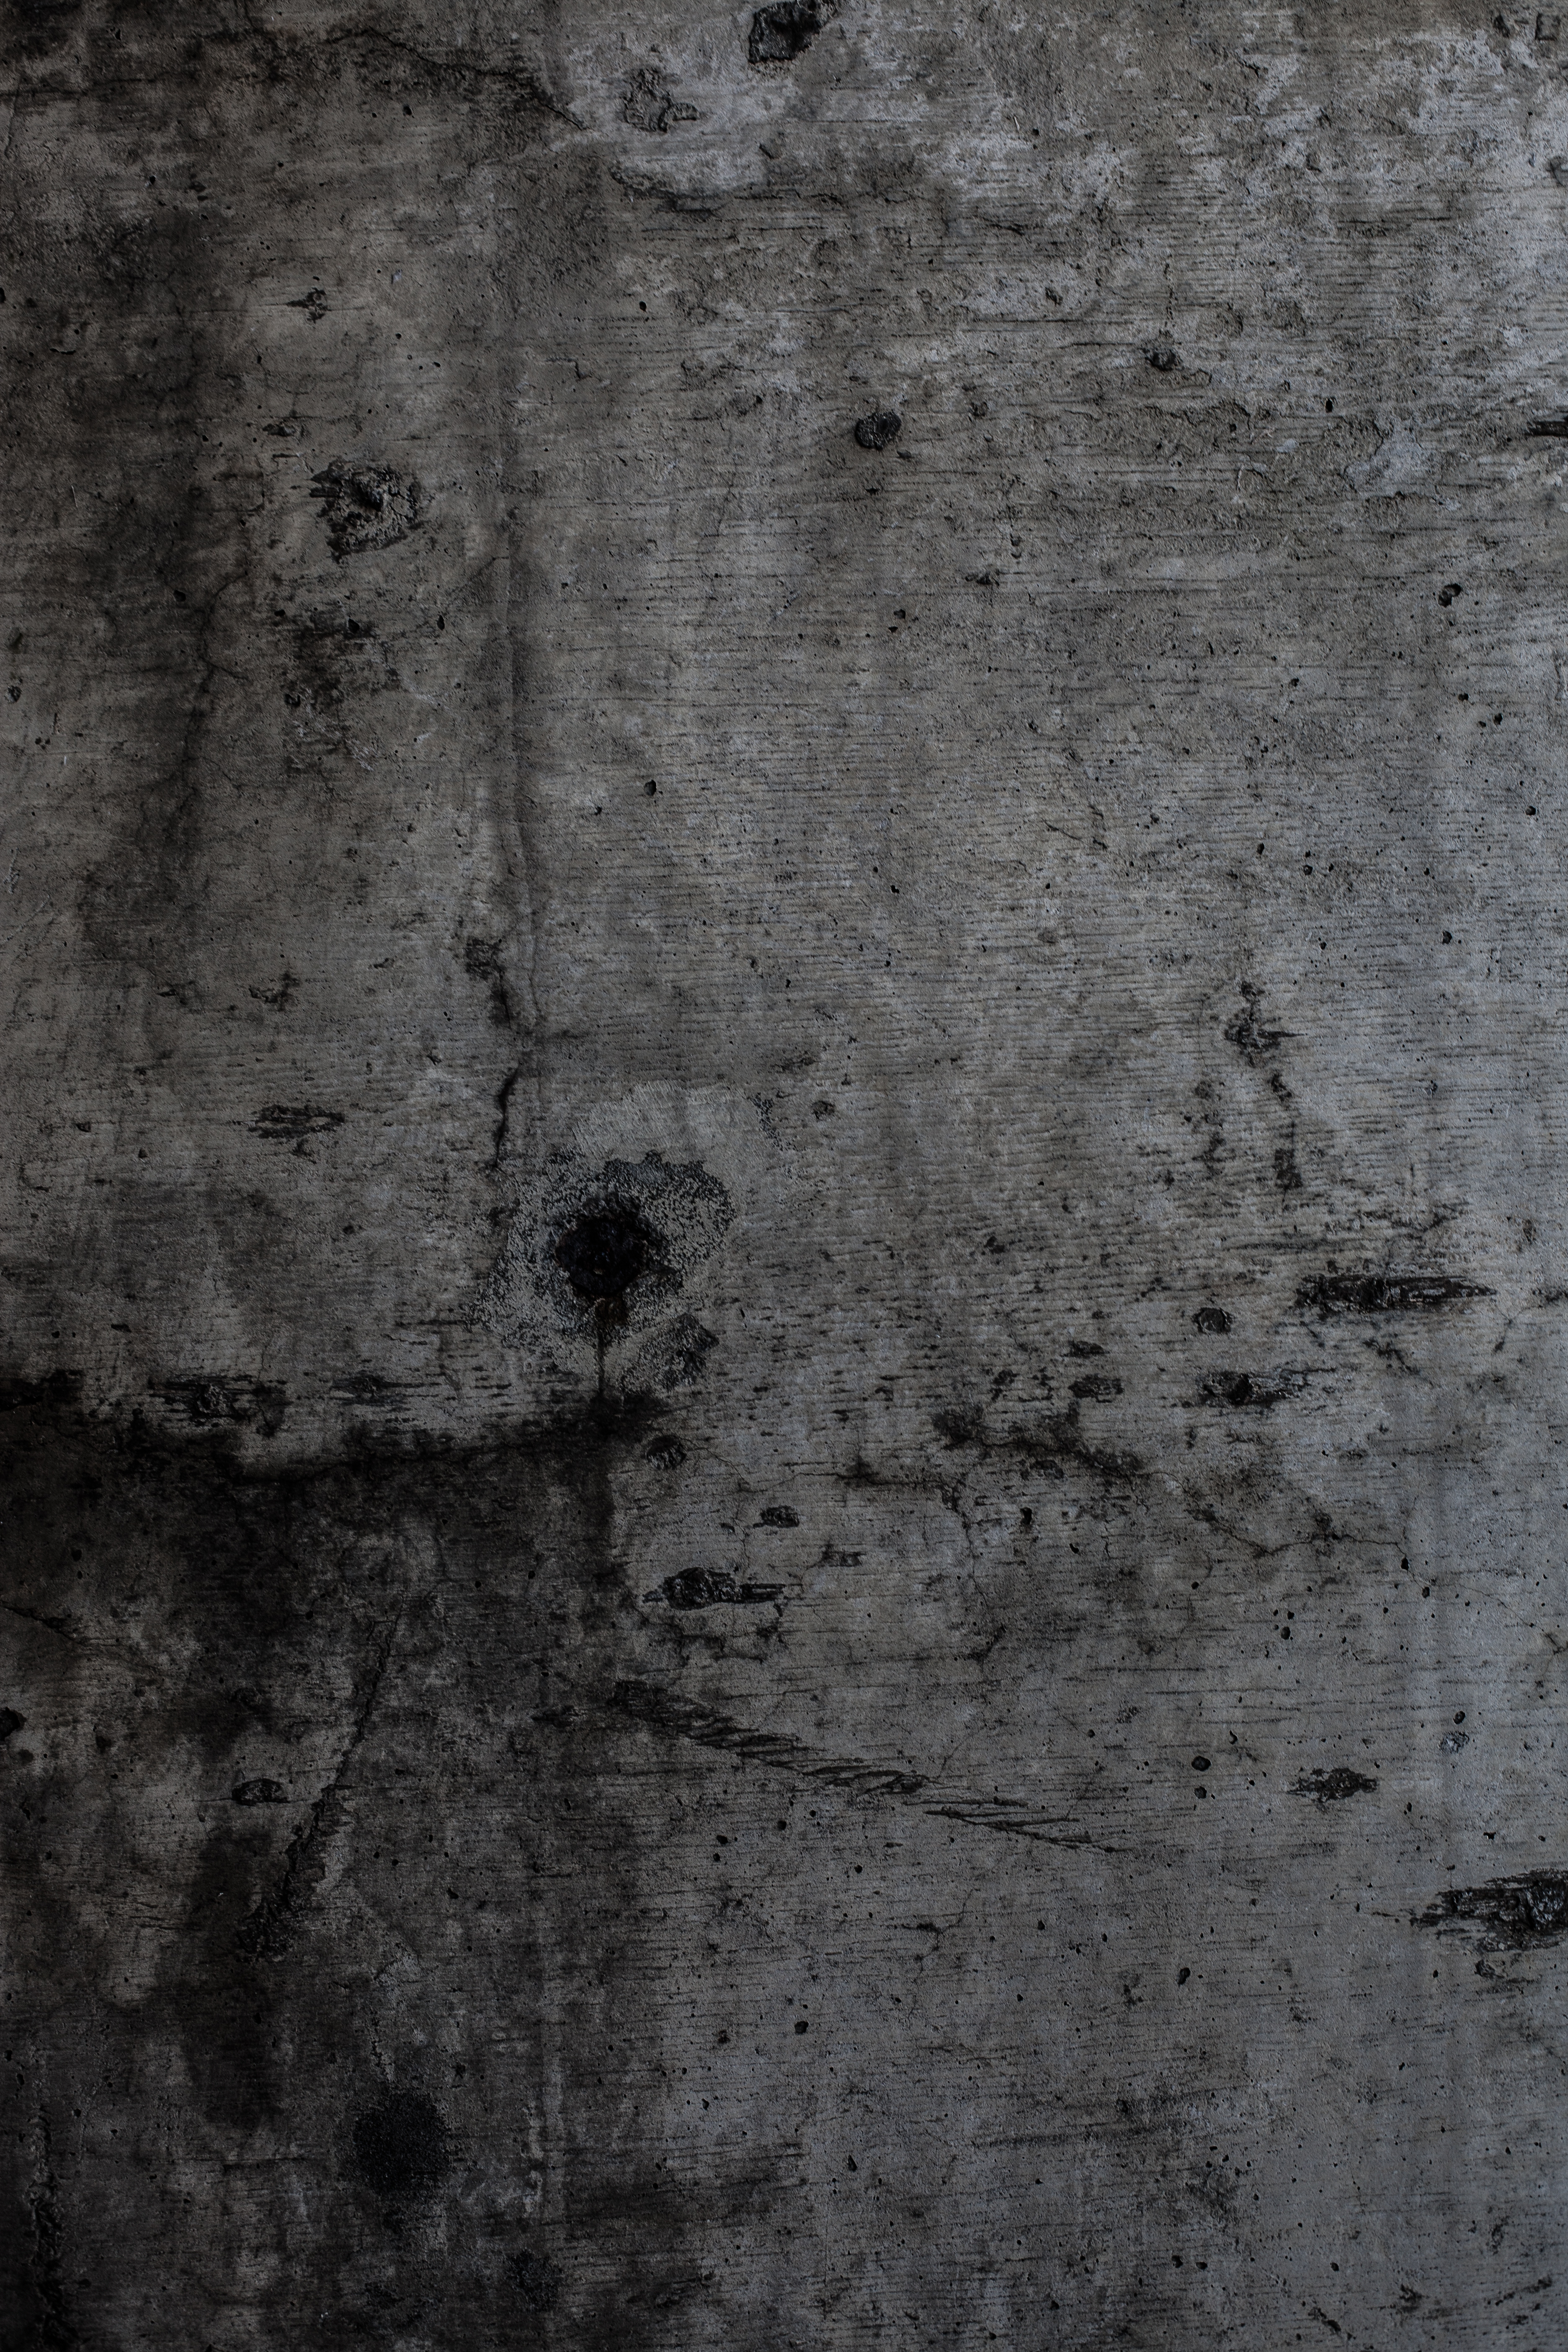 Cracked grunge concrete surface photo